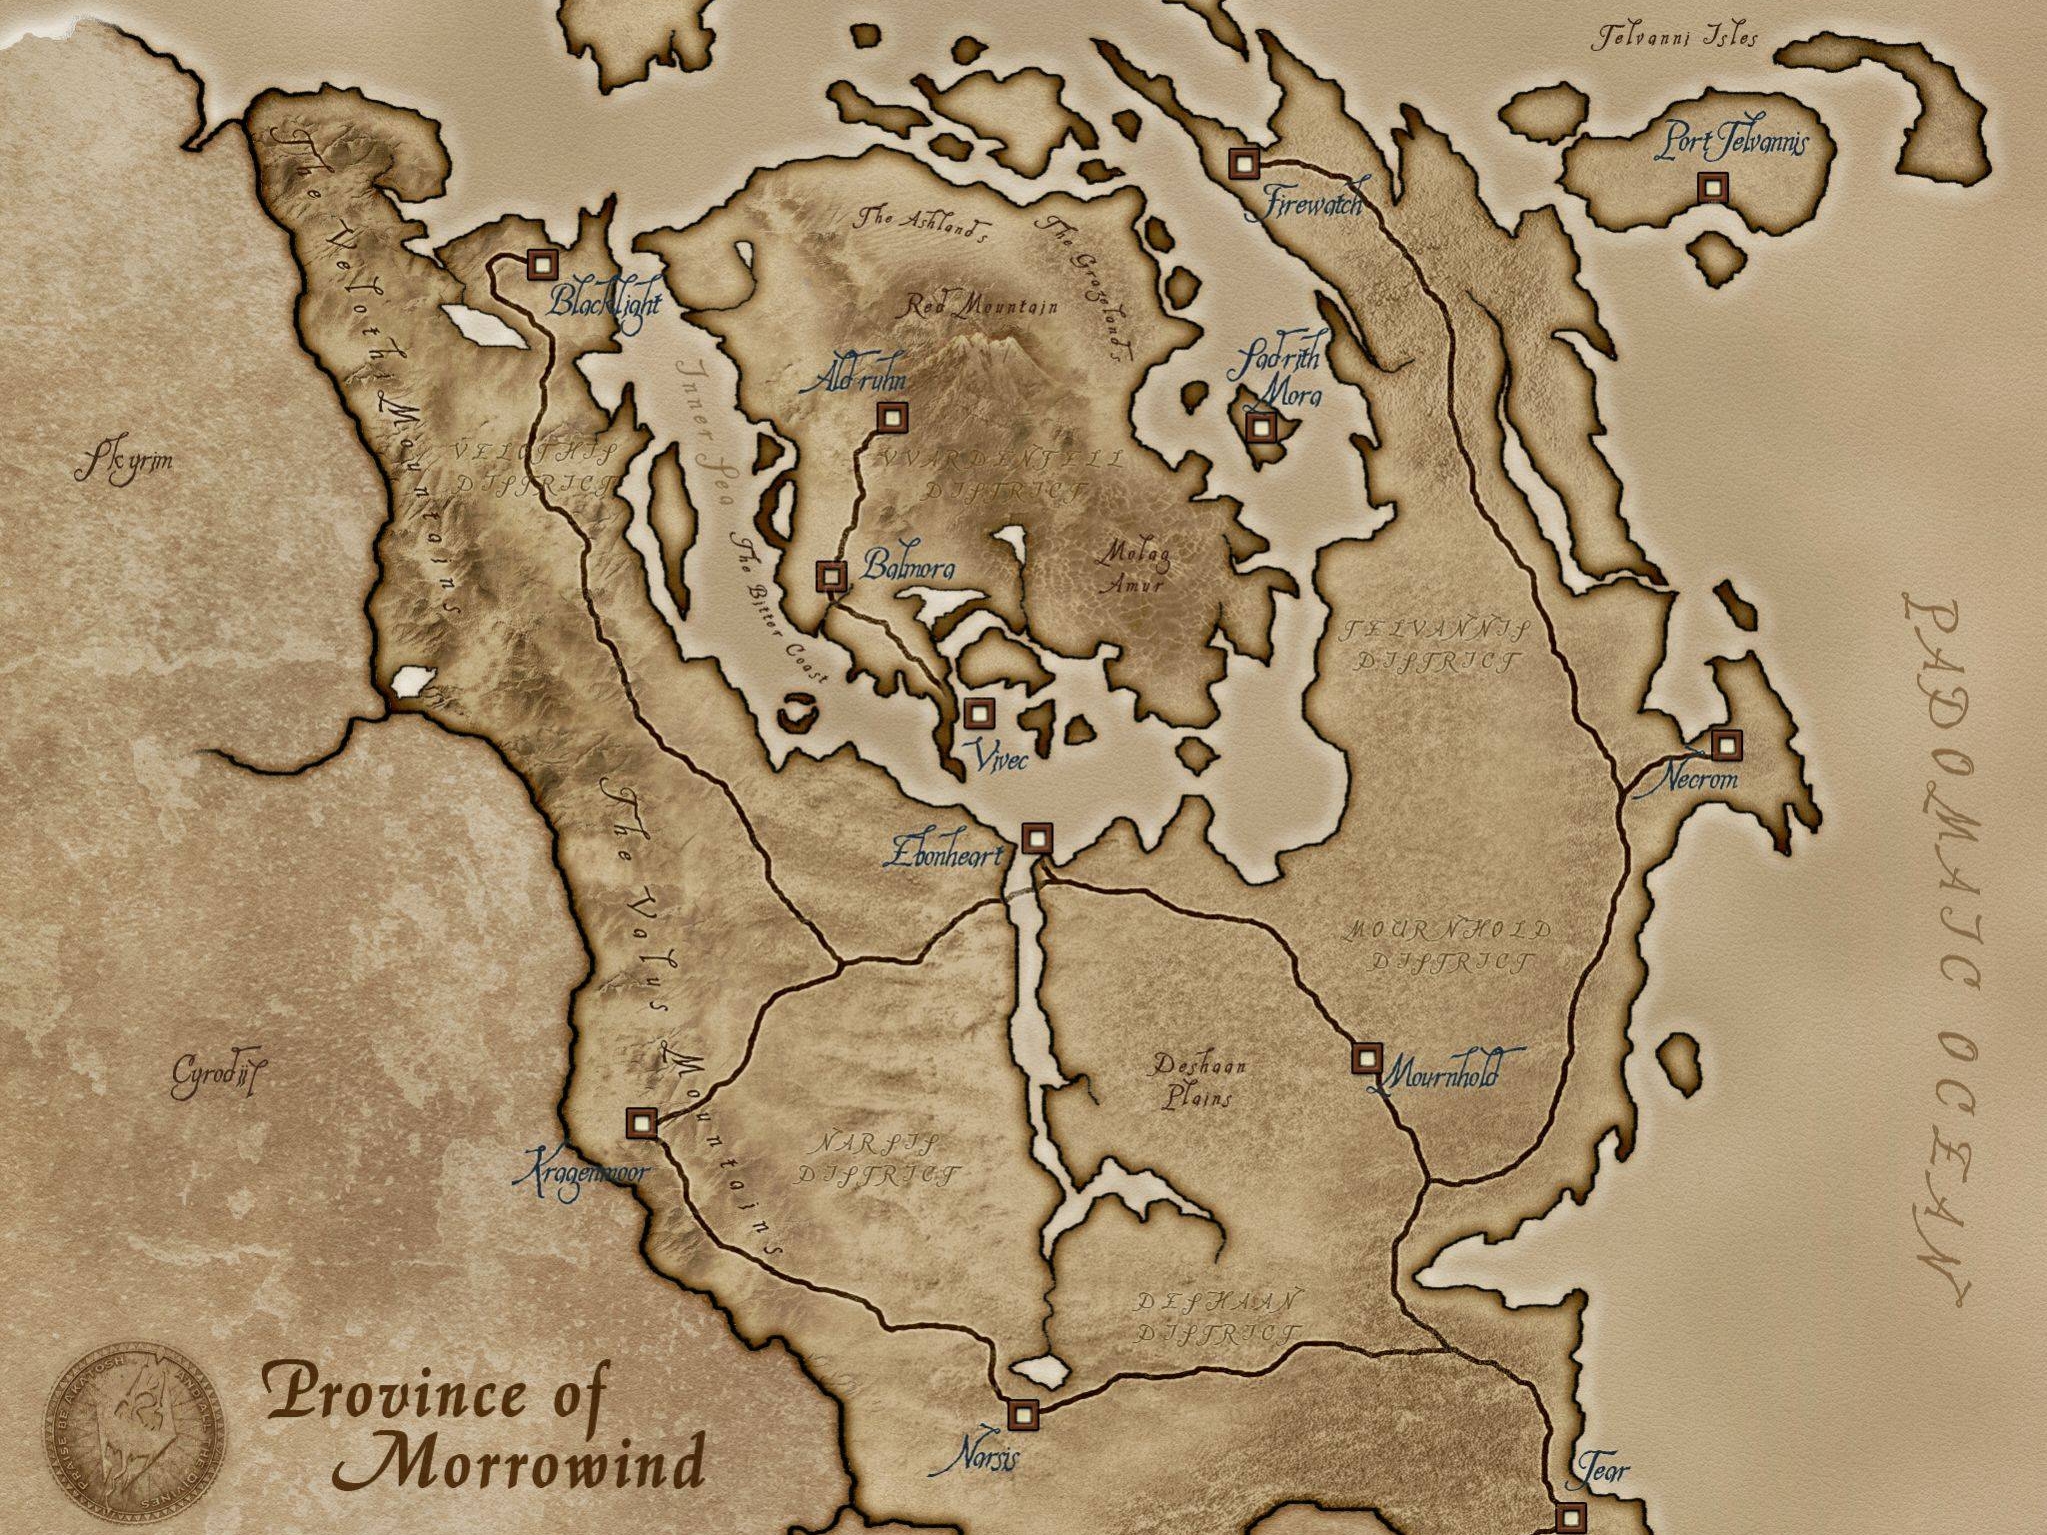 Video Game The Elder Scrolls III: Morrowind HD Wallpaper | Background Image